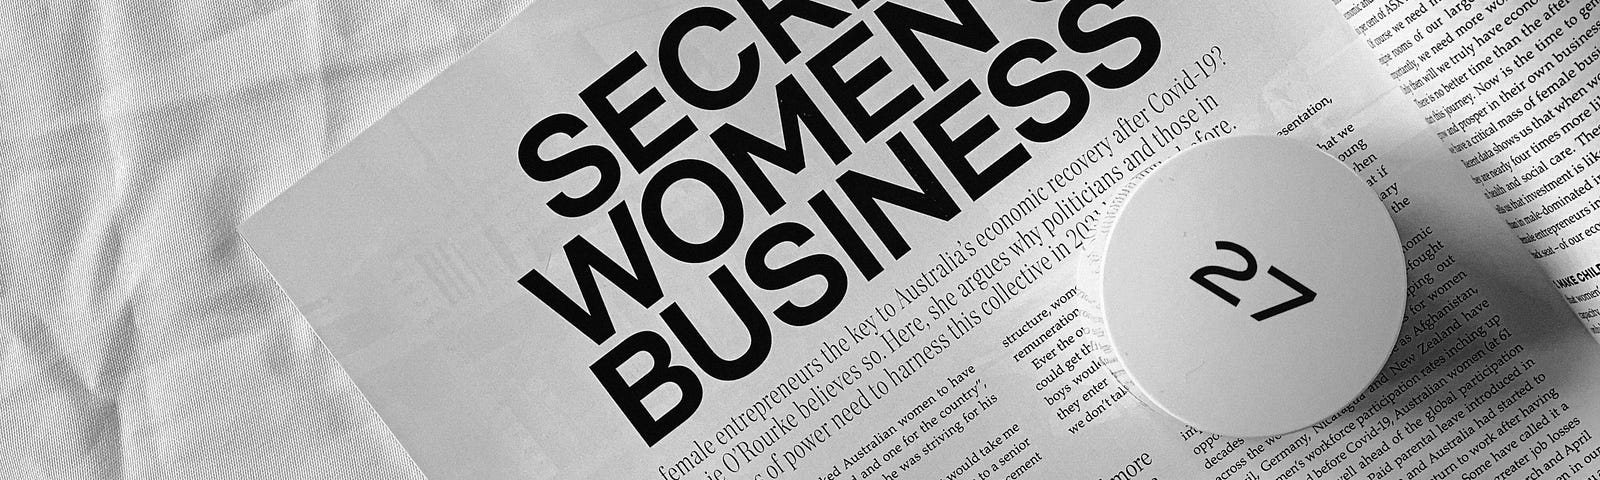 headline says”Secret Women’s Business”